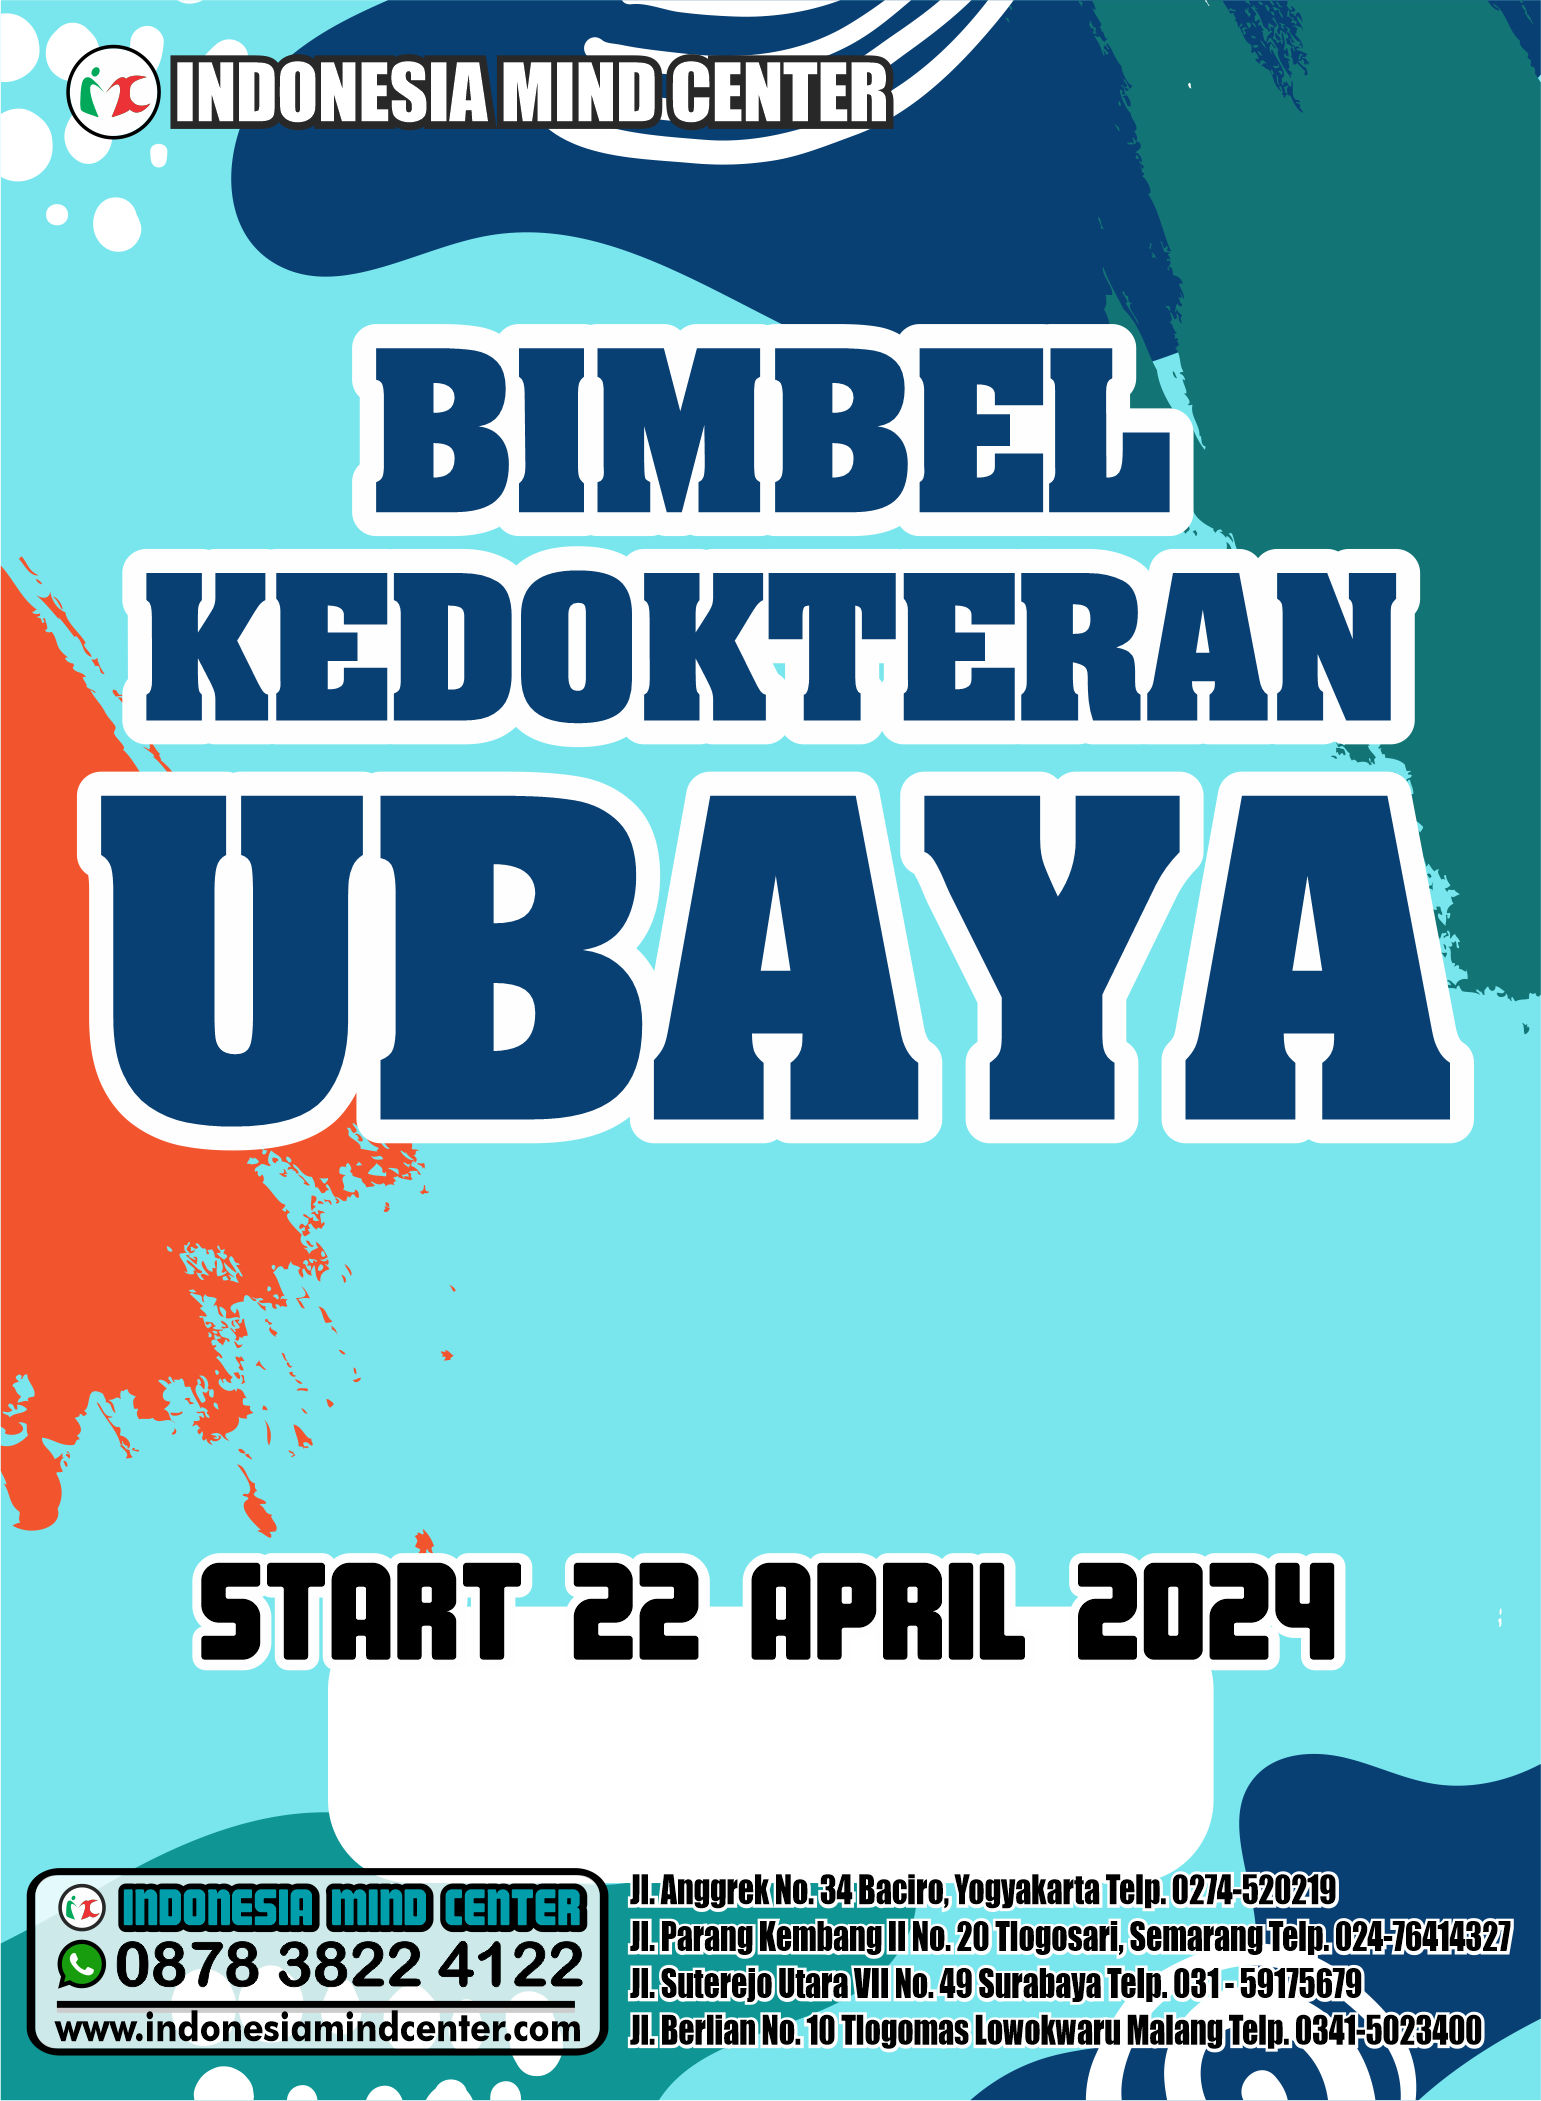 BIMBEL KEDOKTERAN UBAYA START 22 APRIL 2024